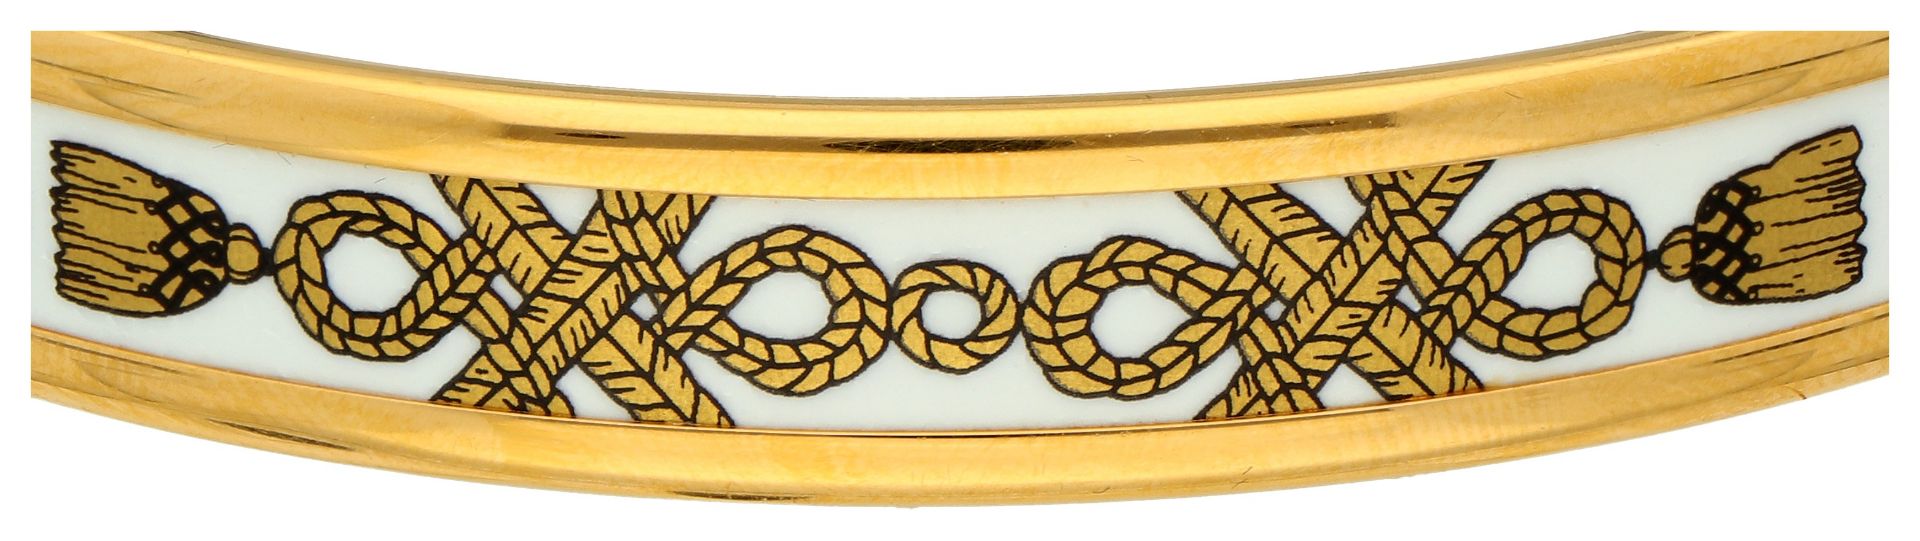 No Reserve - Hermès steel bangle bracelet with white enamel. - Image 6 of 6